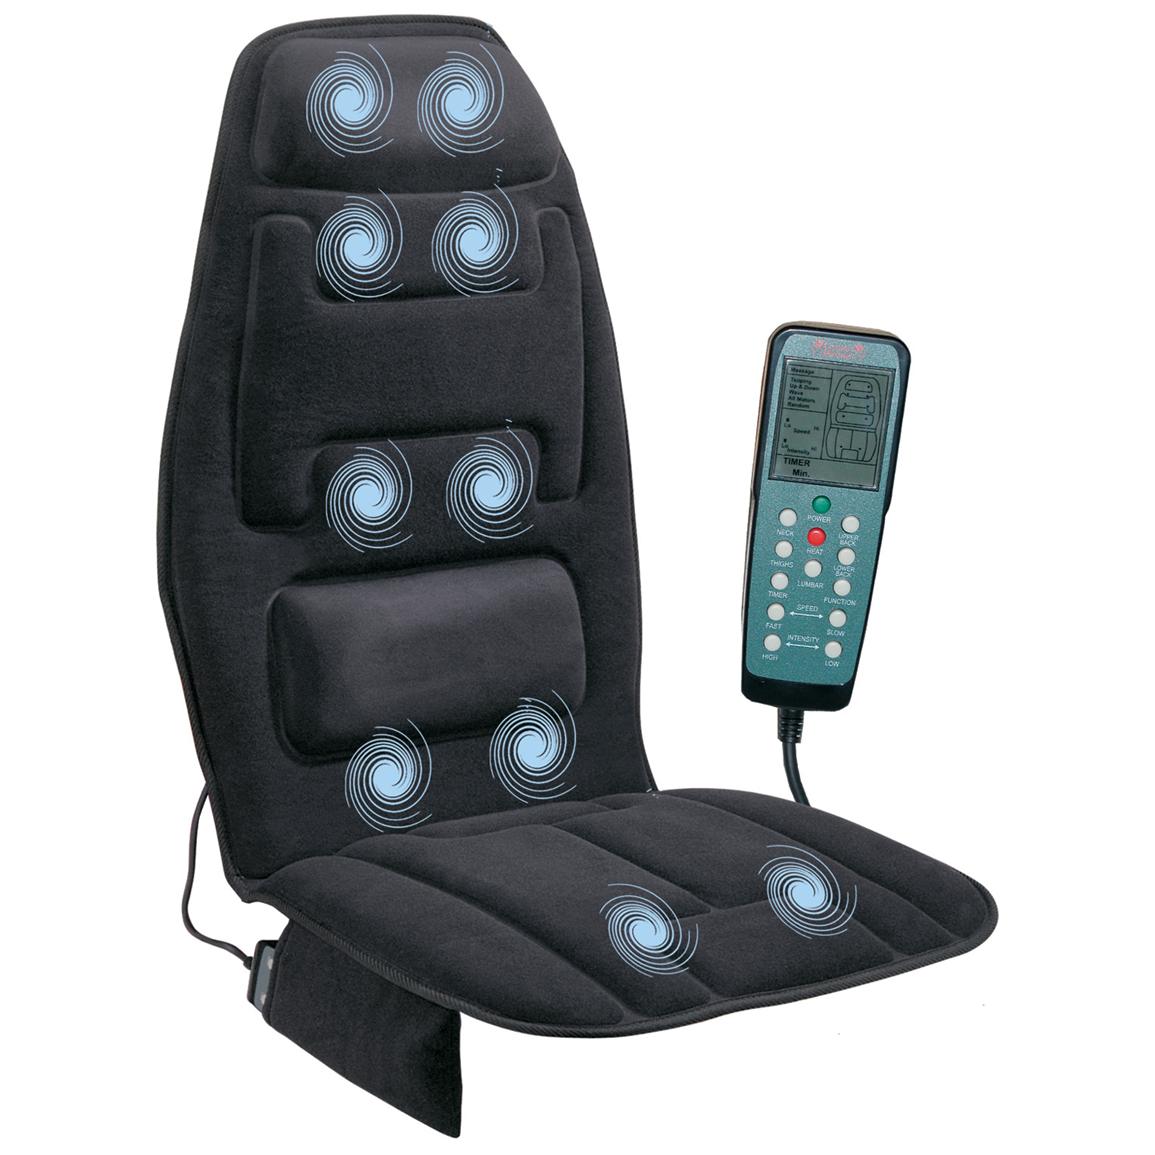 Comfort Products 10-Motor Massage Cushion with Heat - 307427, Massage